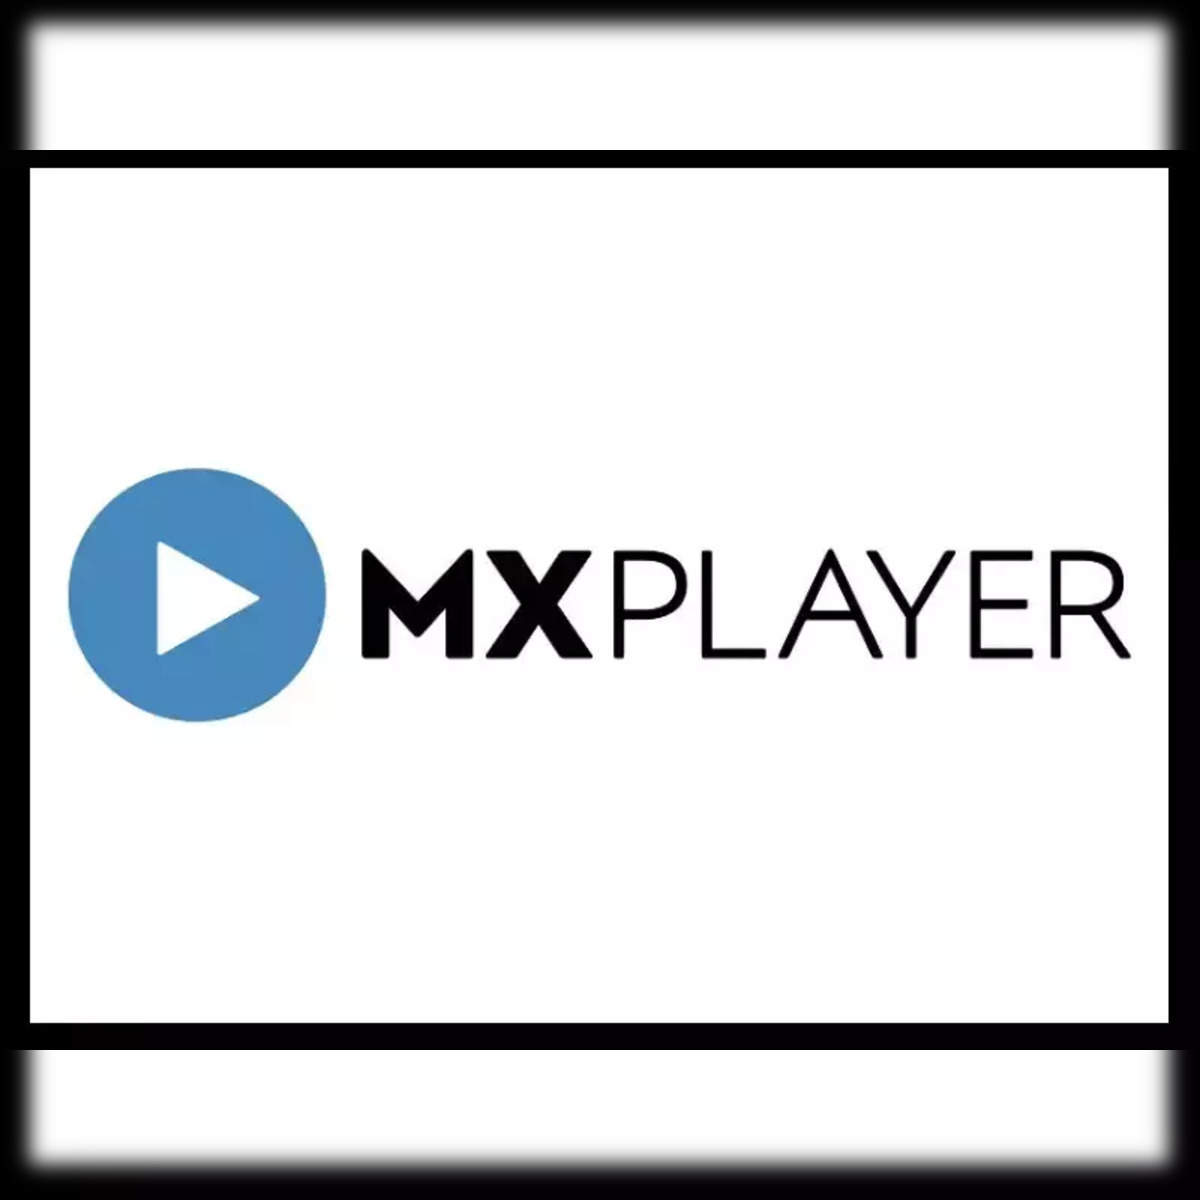 MX Player - Company Profile - Tracxn